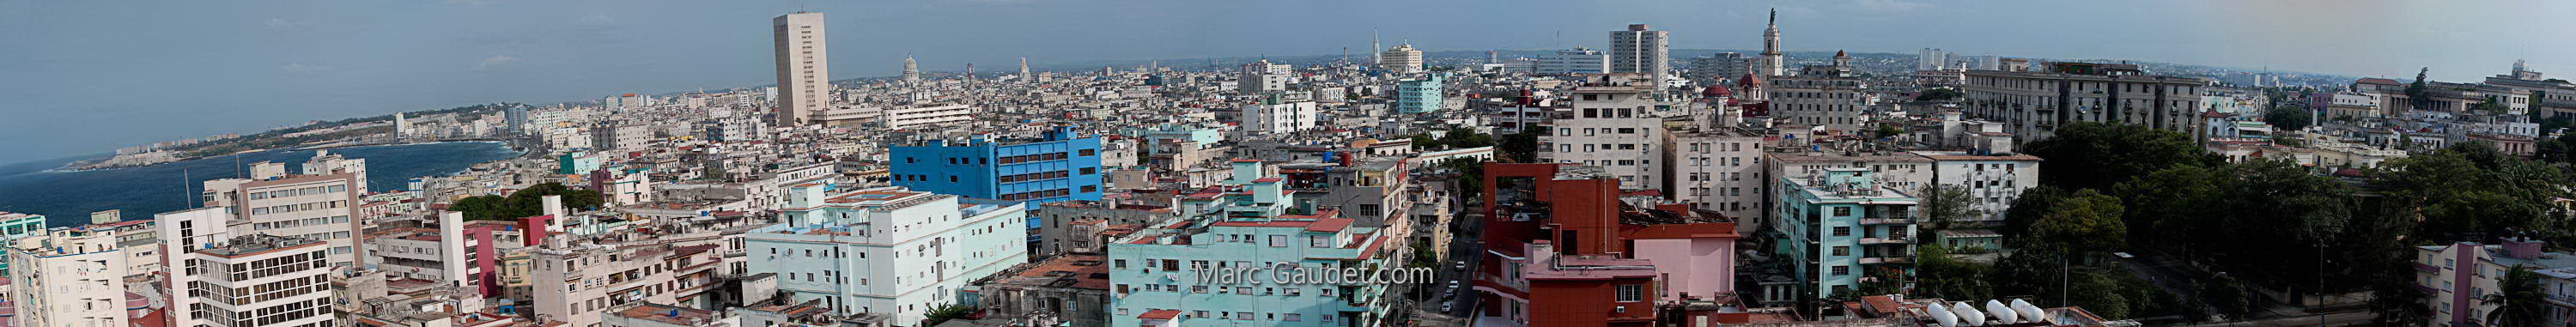 Havana Panoramic View by Marc Gaudet